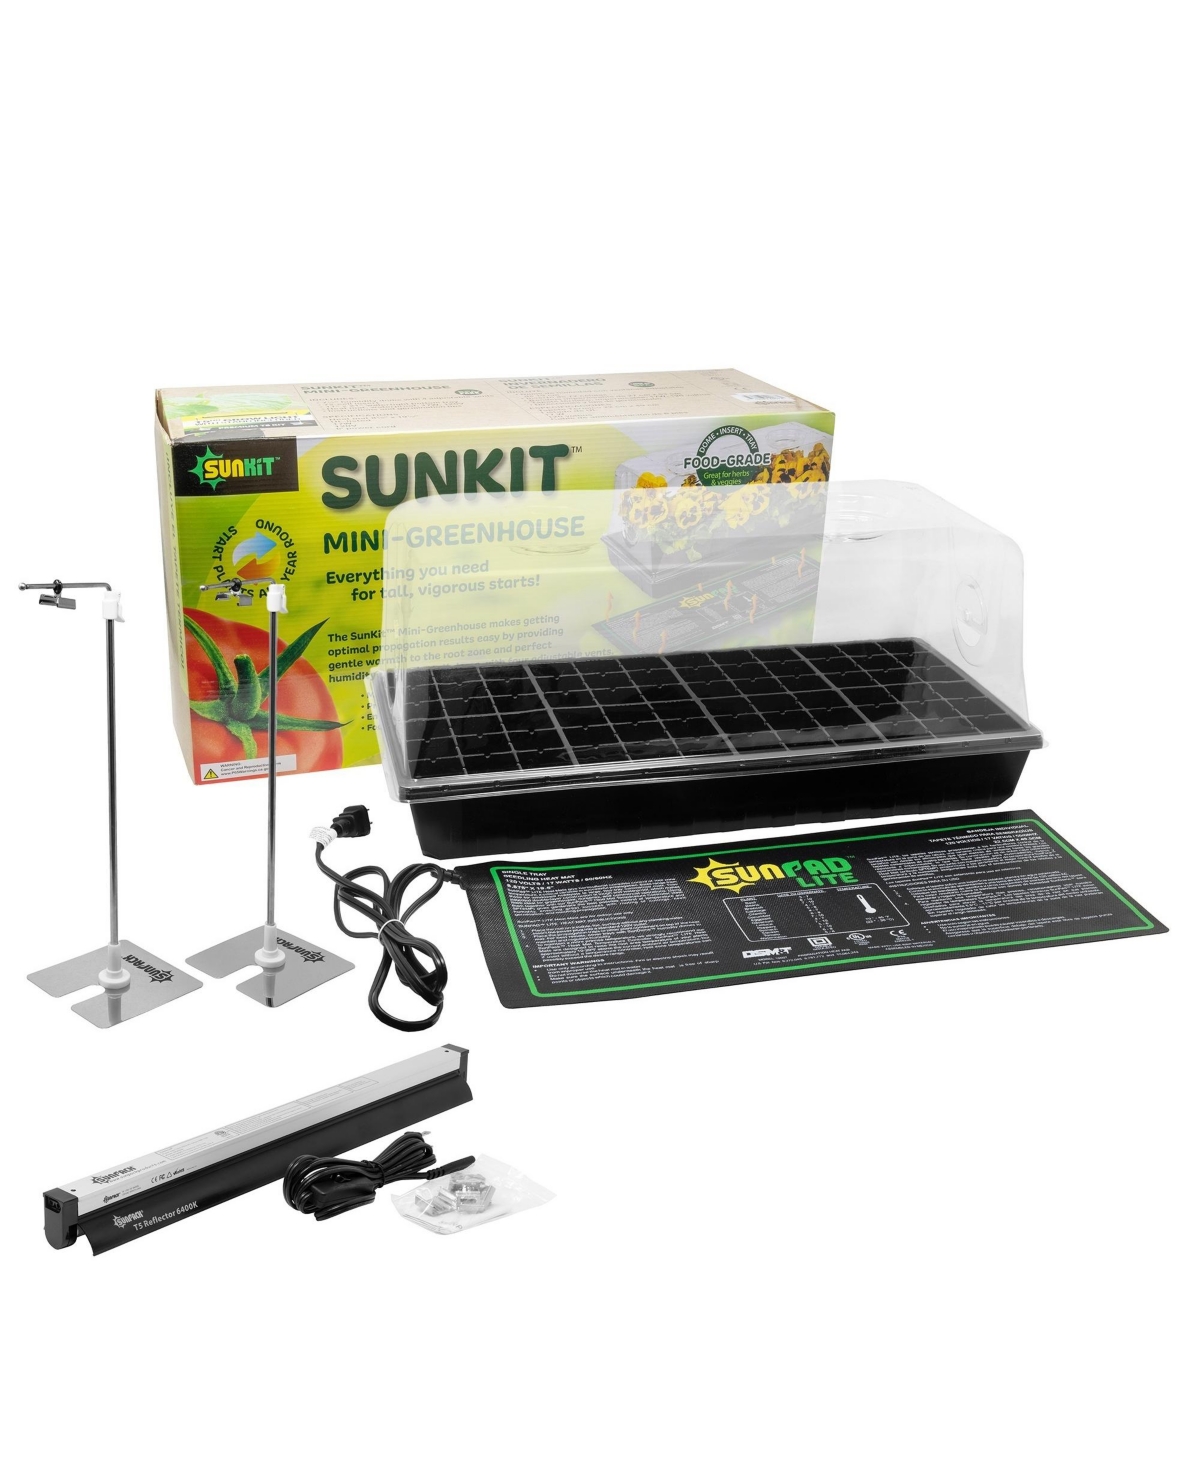 Sunkit T5HO Mini Greenhouse Kit for indoor Gardening Seed Starting - Multi